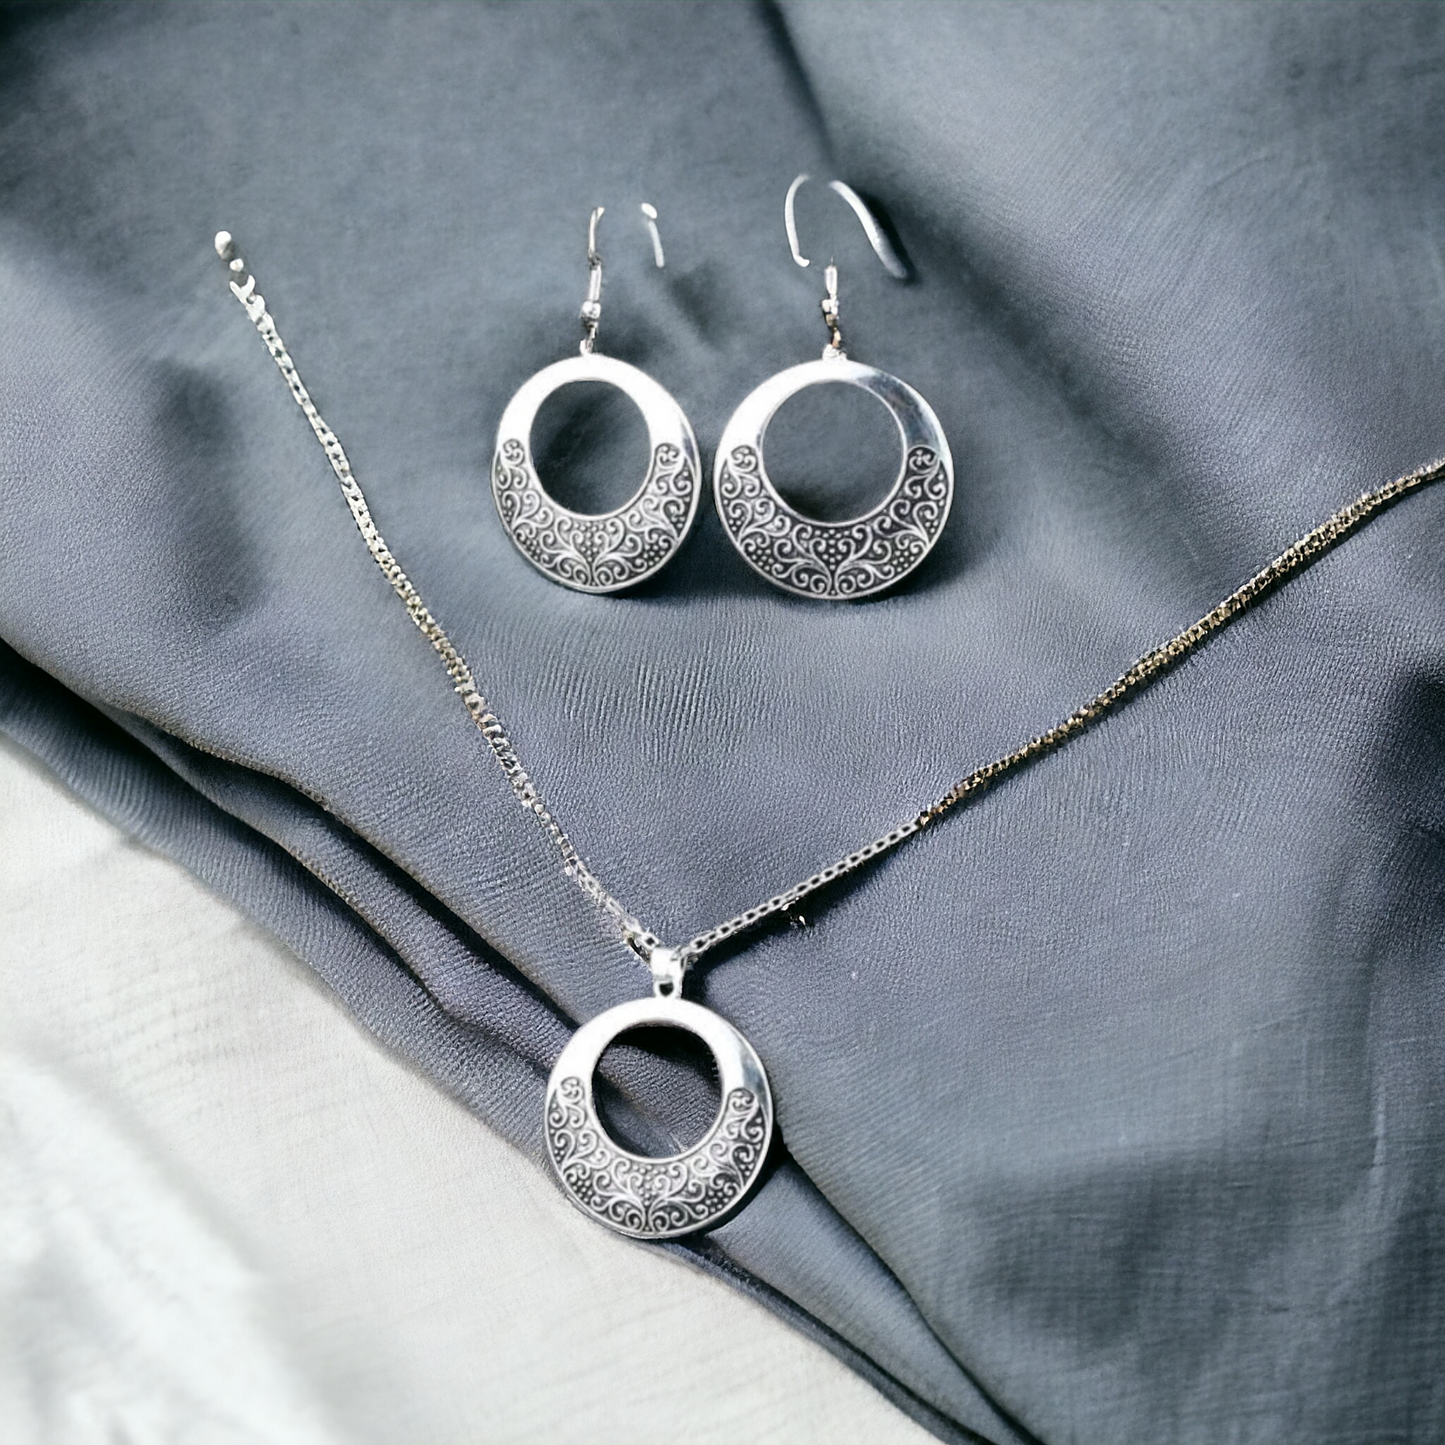 Silver swirl necklace set